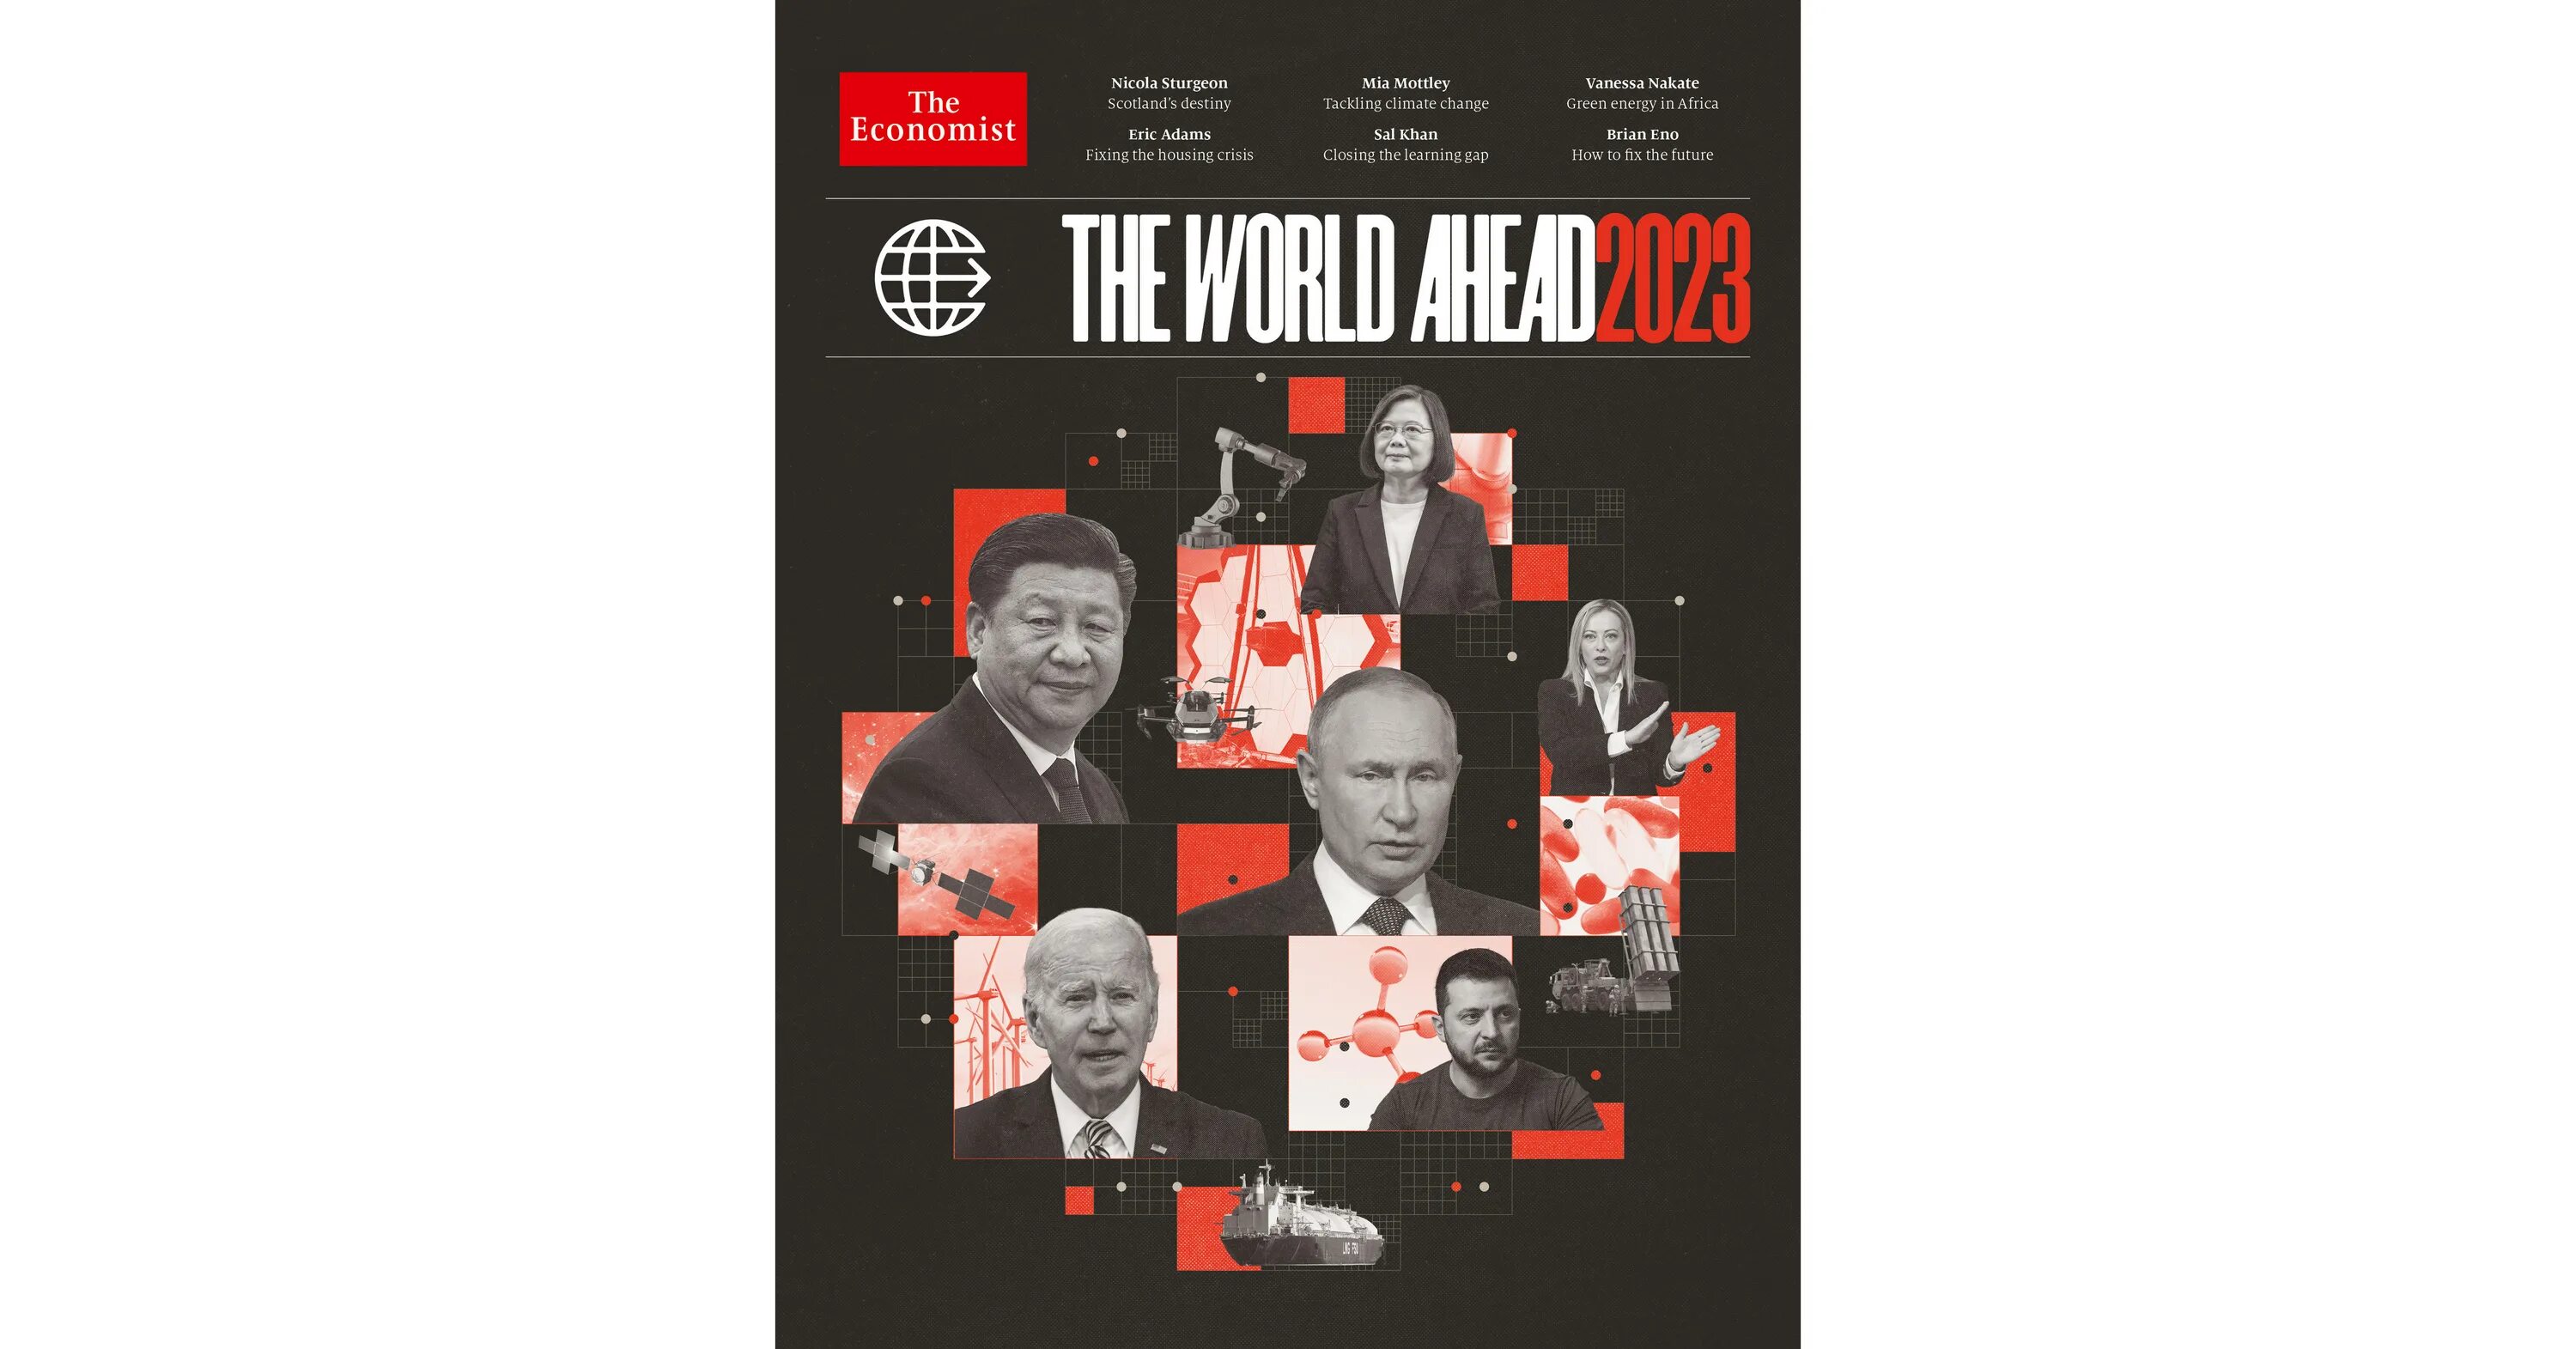 Последний журнал экономист. Обложки журнала the Economist за 2023. Ротшильд журнал экономист 2023. Обложка журнала экономист 2023. Новая обложка журнала the Economist 2023.